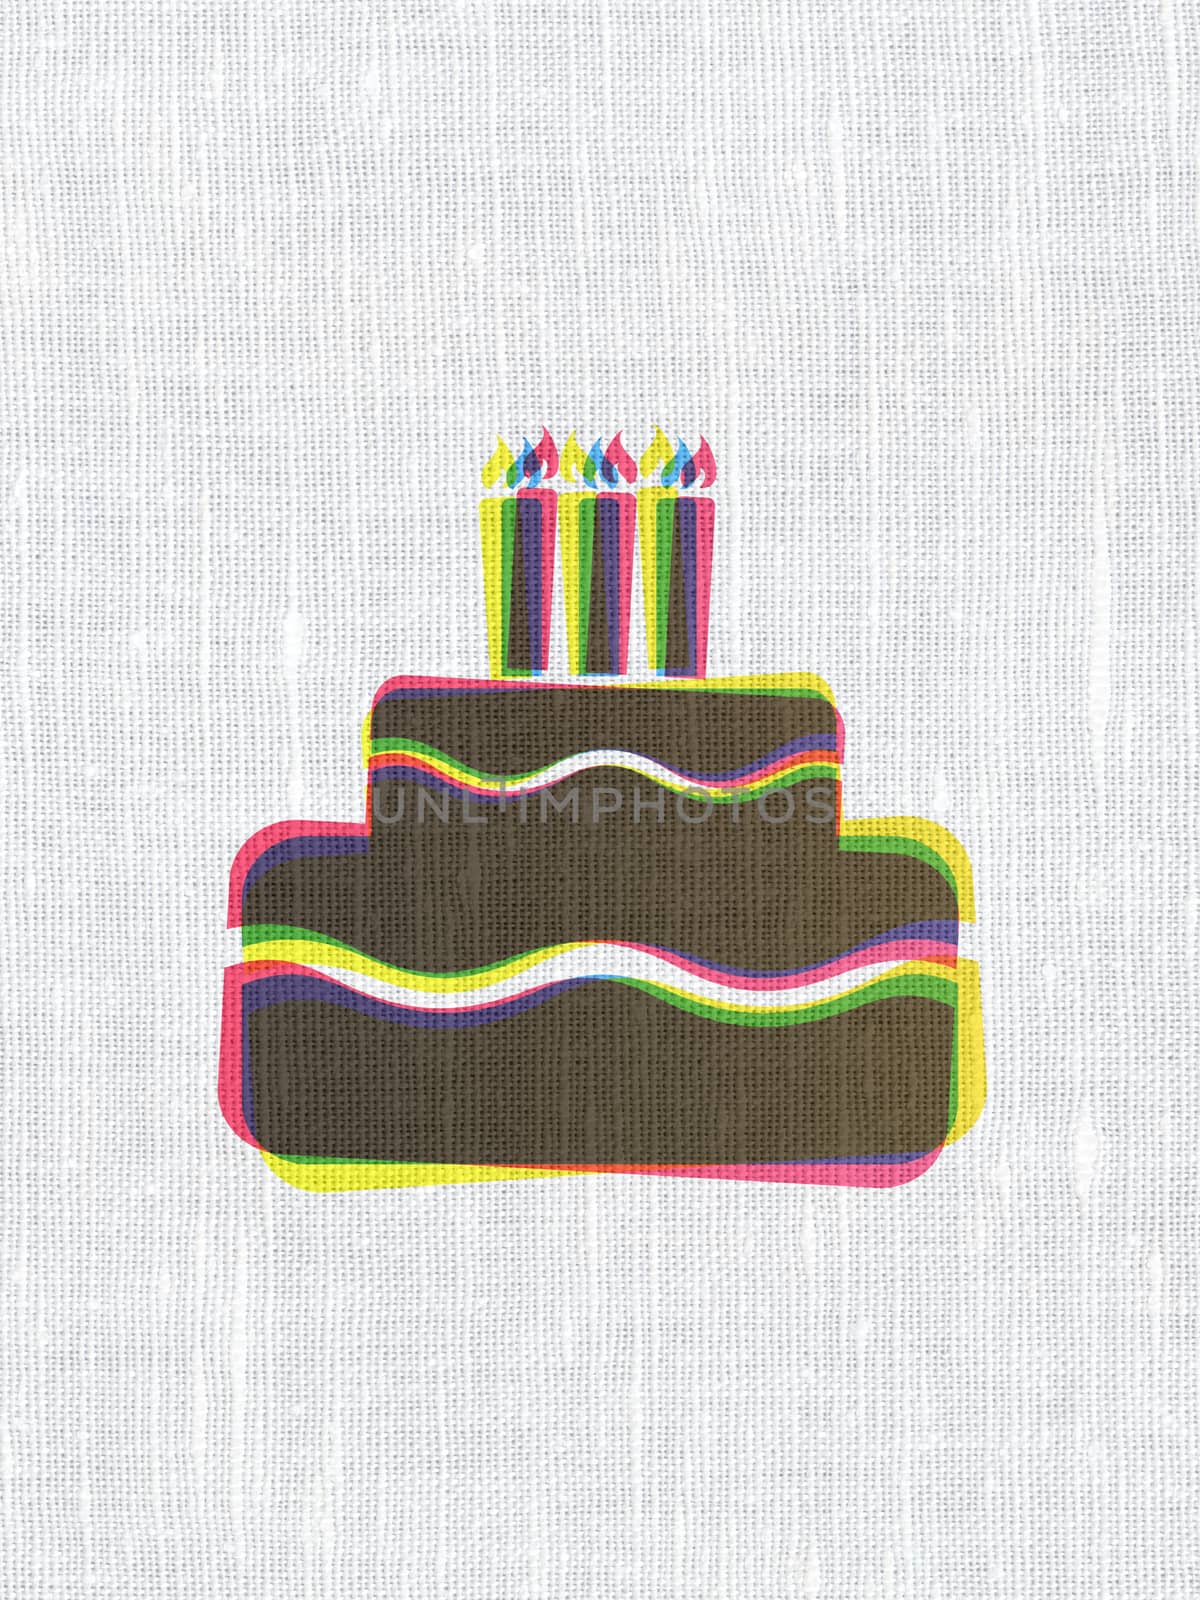 Entertainment, concept: CMYK Cake on linen fabric texture background